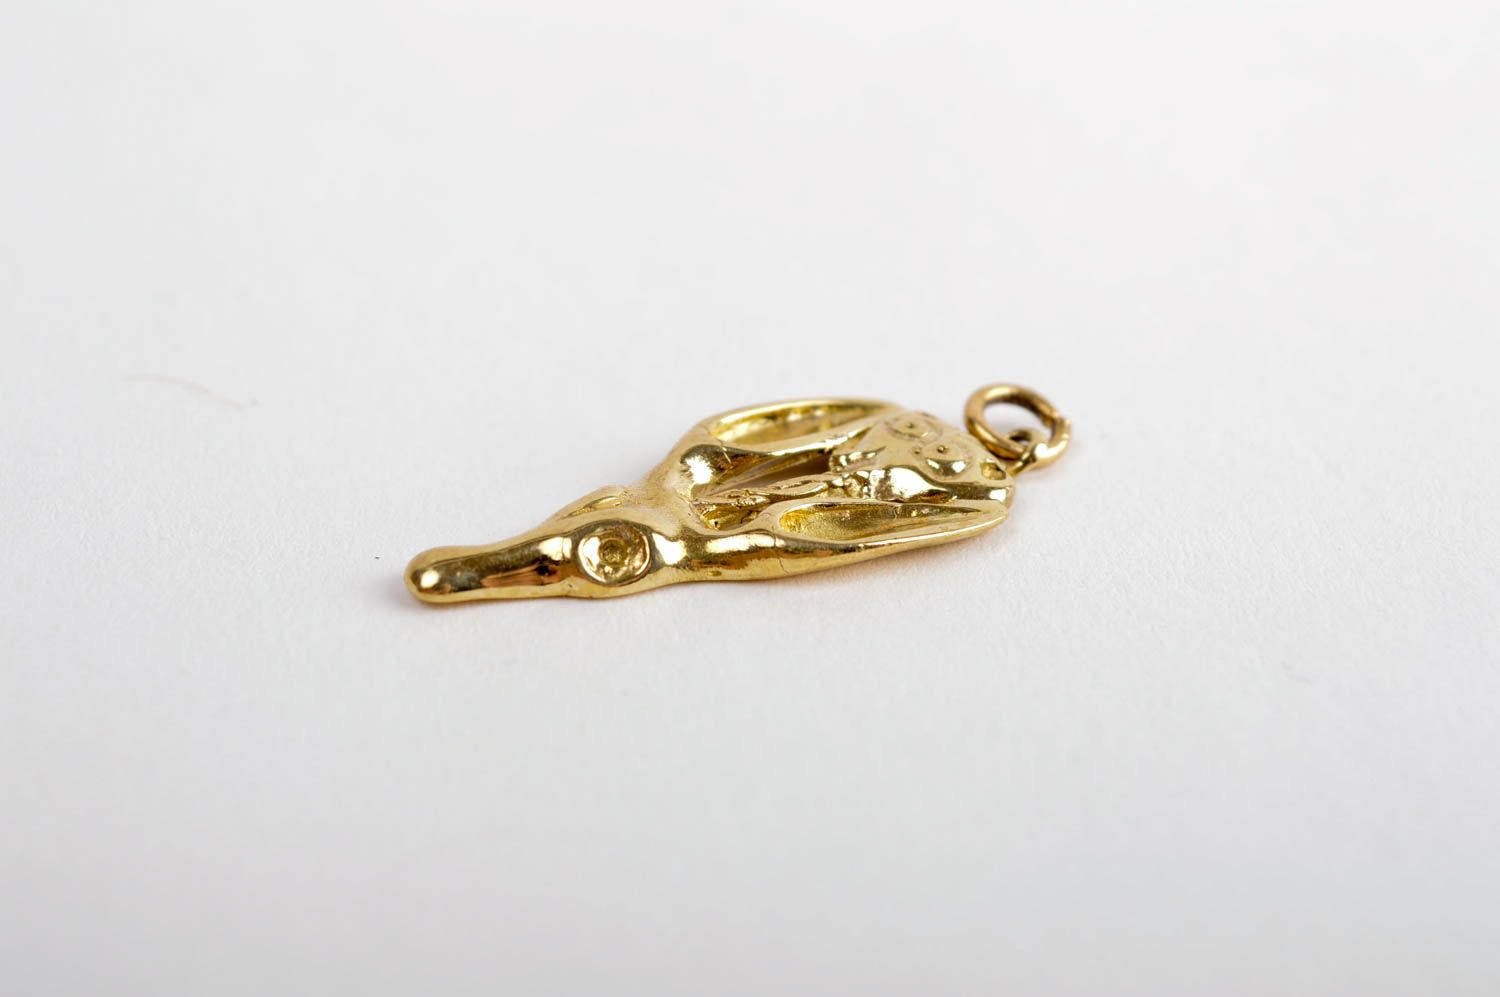 Handmade metal jewelry unusual neck pendant stylish brass pendant gift photo 3